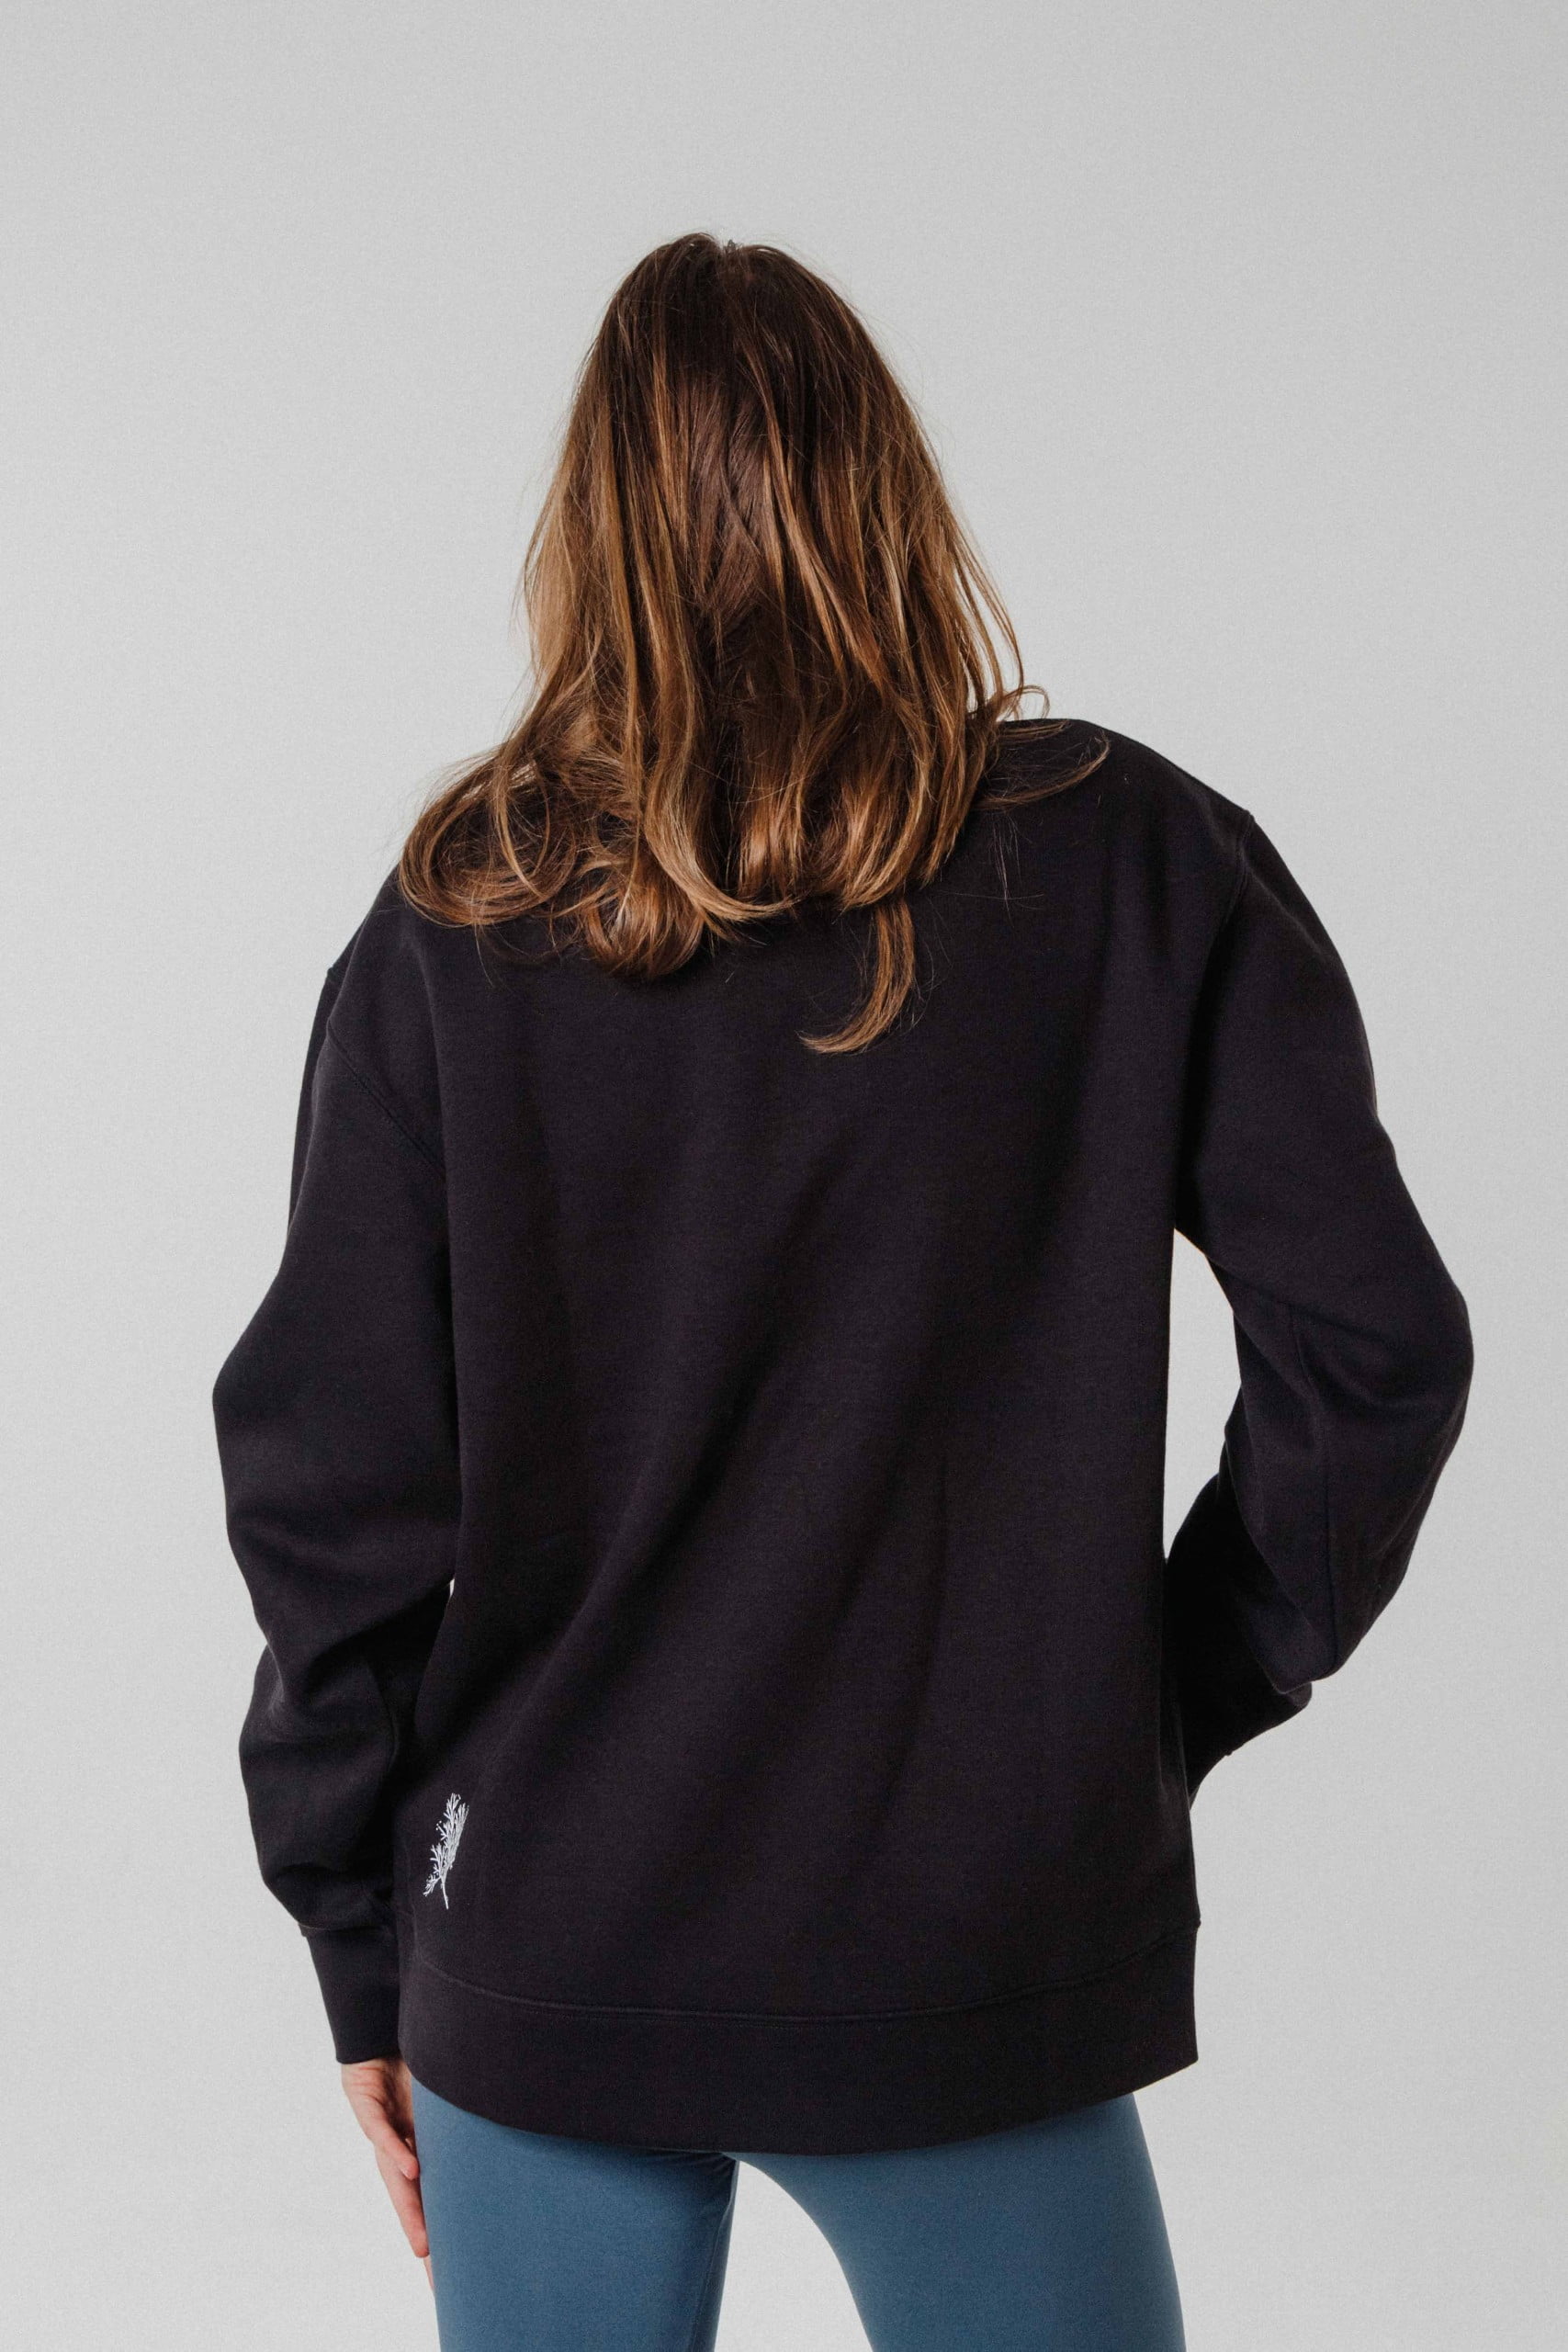 KRISTA BITMETE Unisex Sweatshirt “Just Dill It” | BLACK